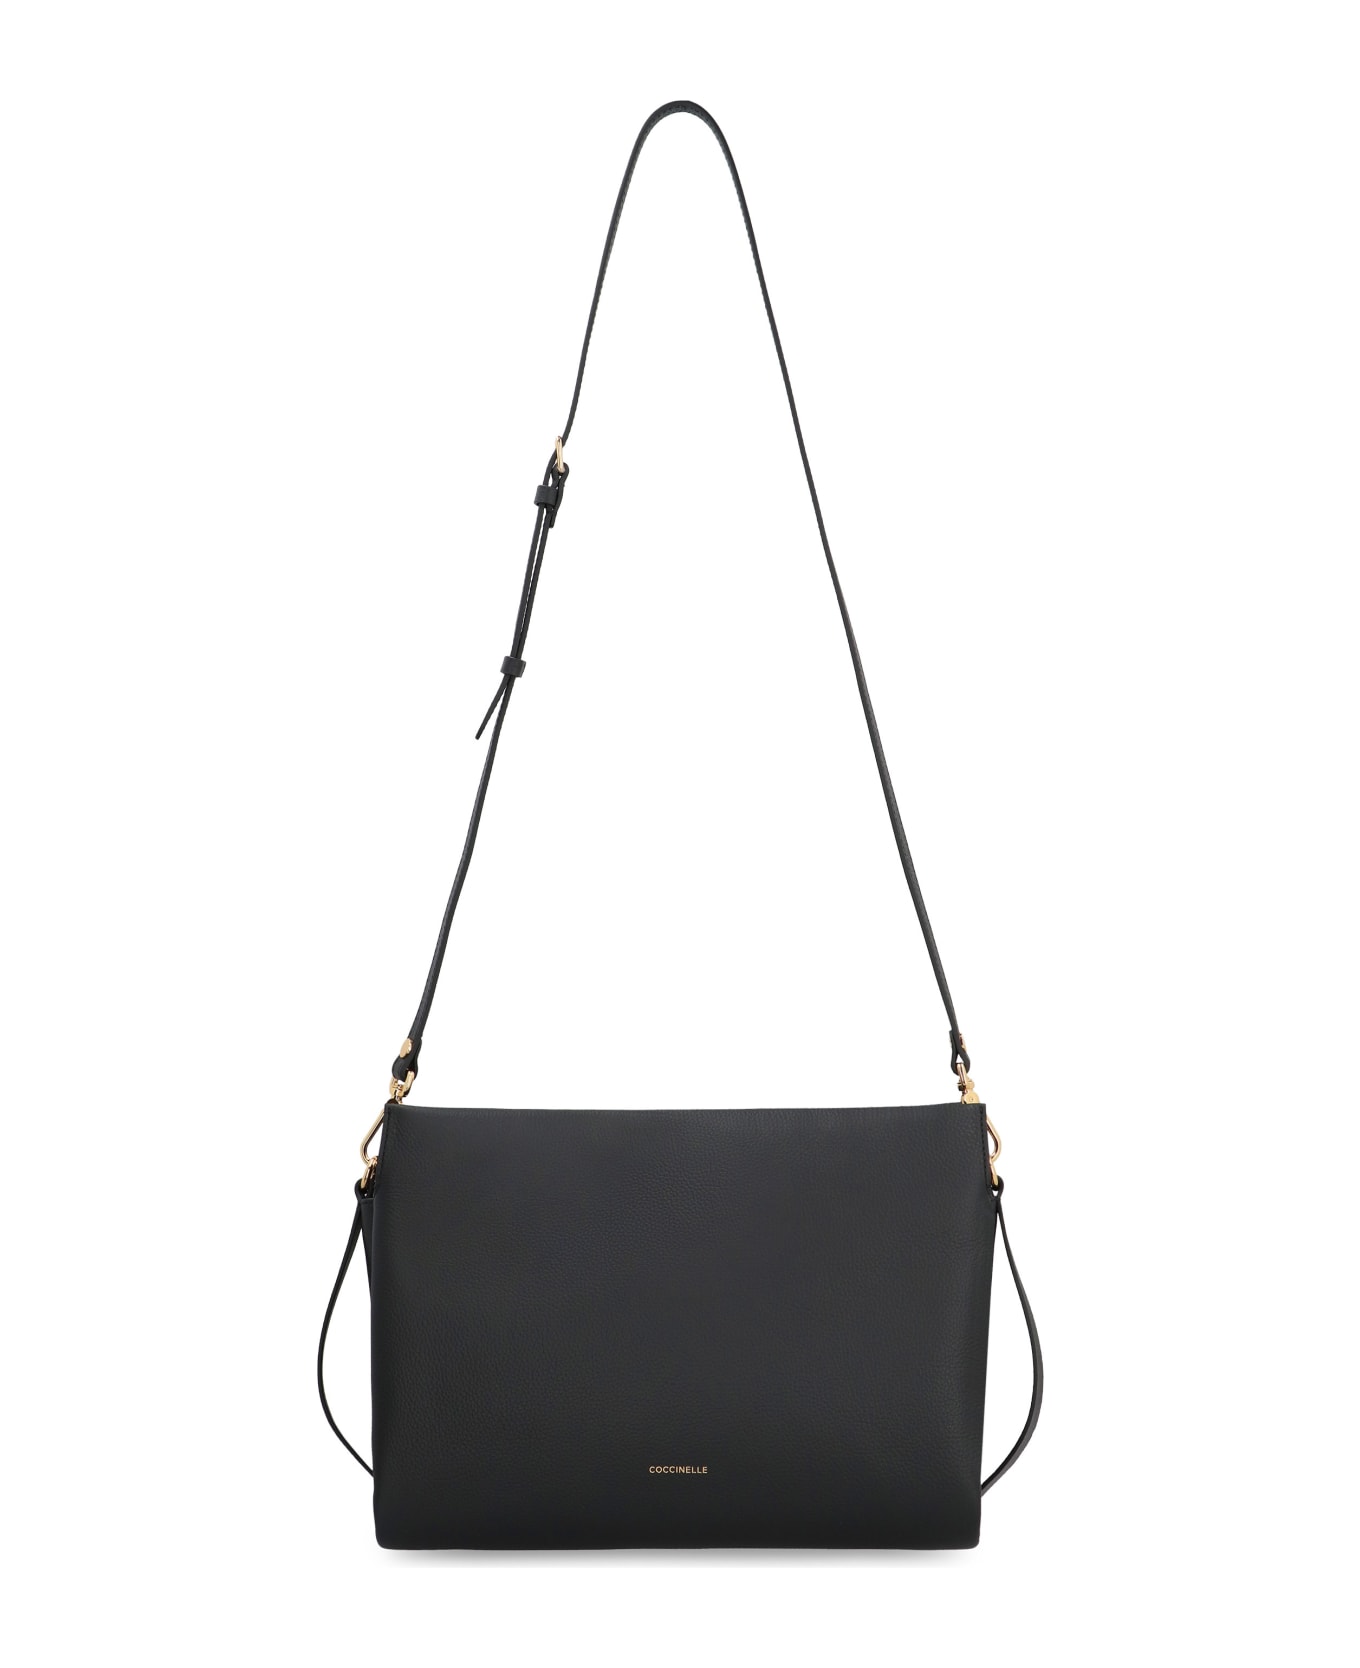 Coccinelle Boheme Leather Handbag - black